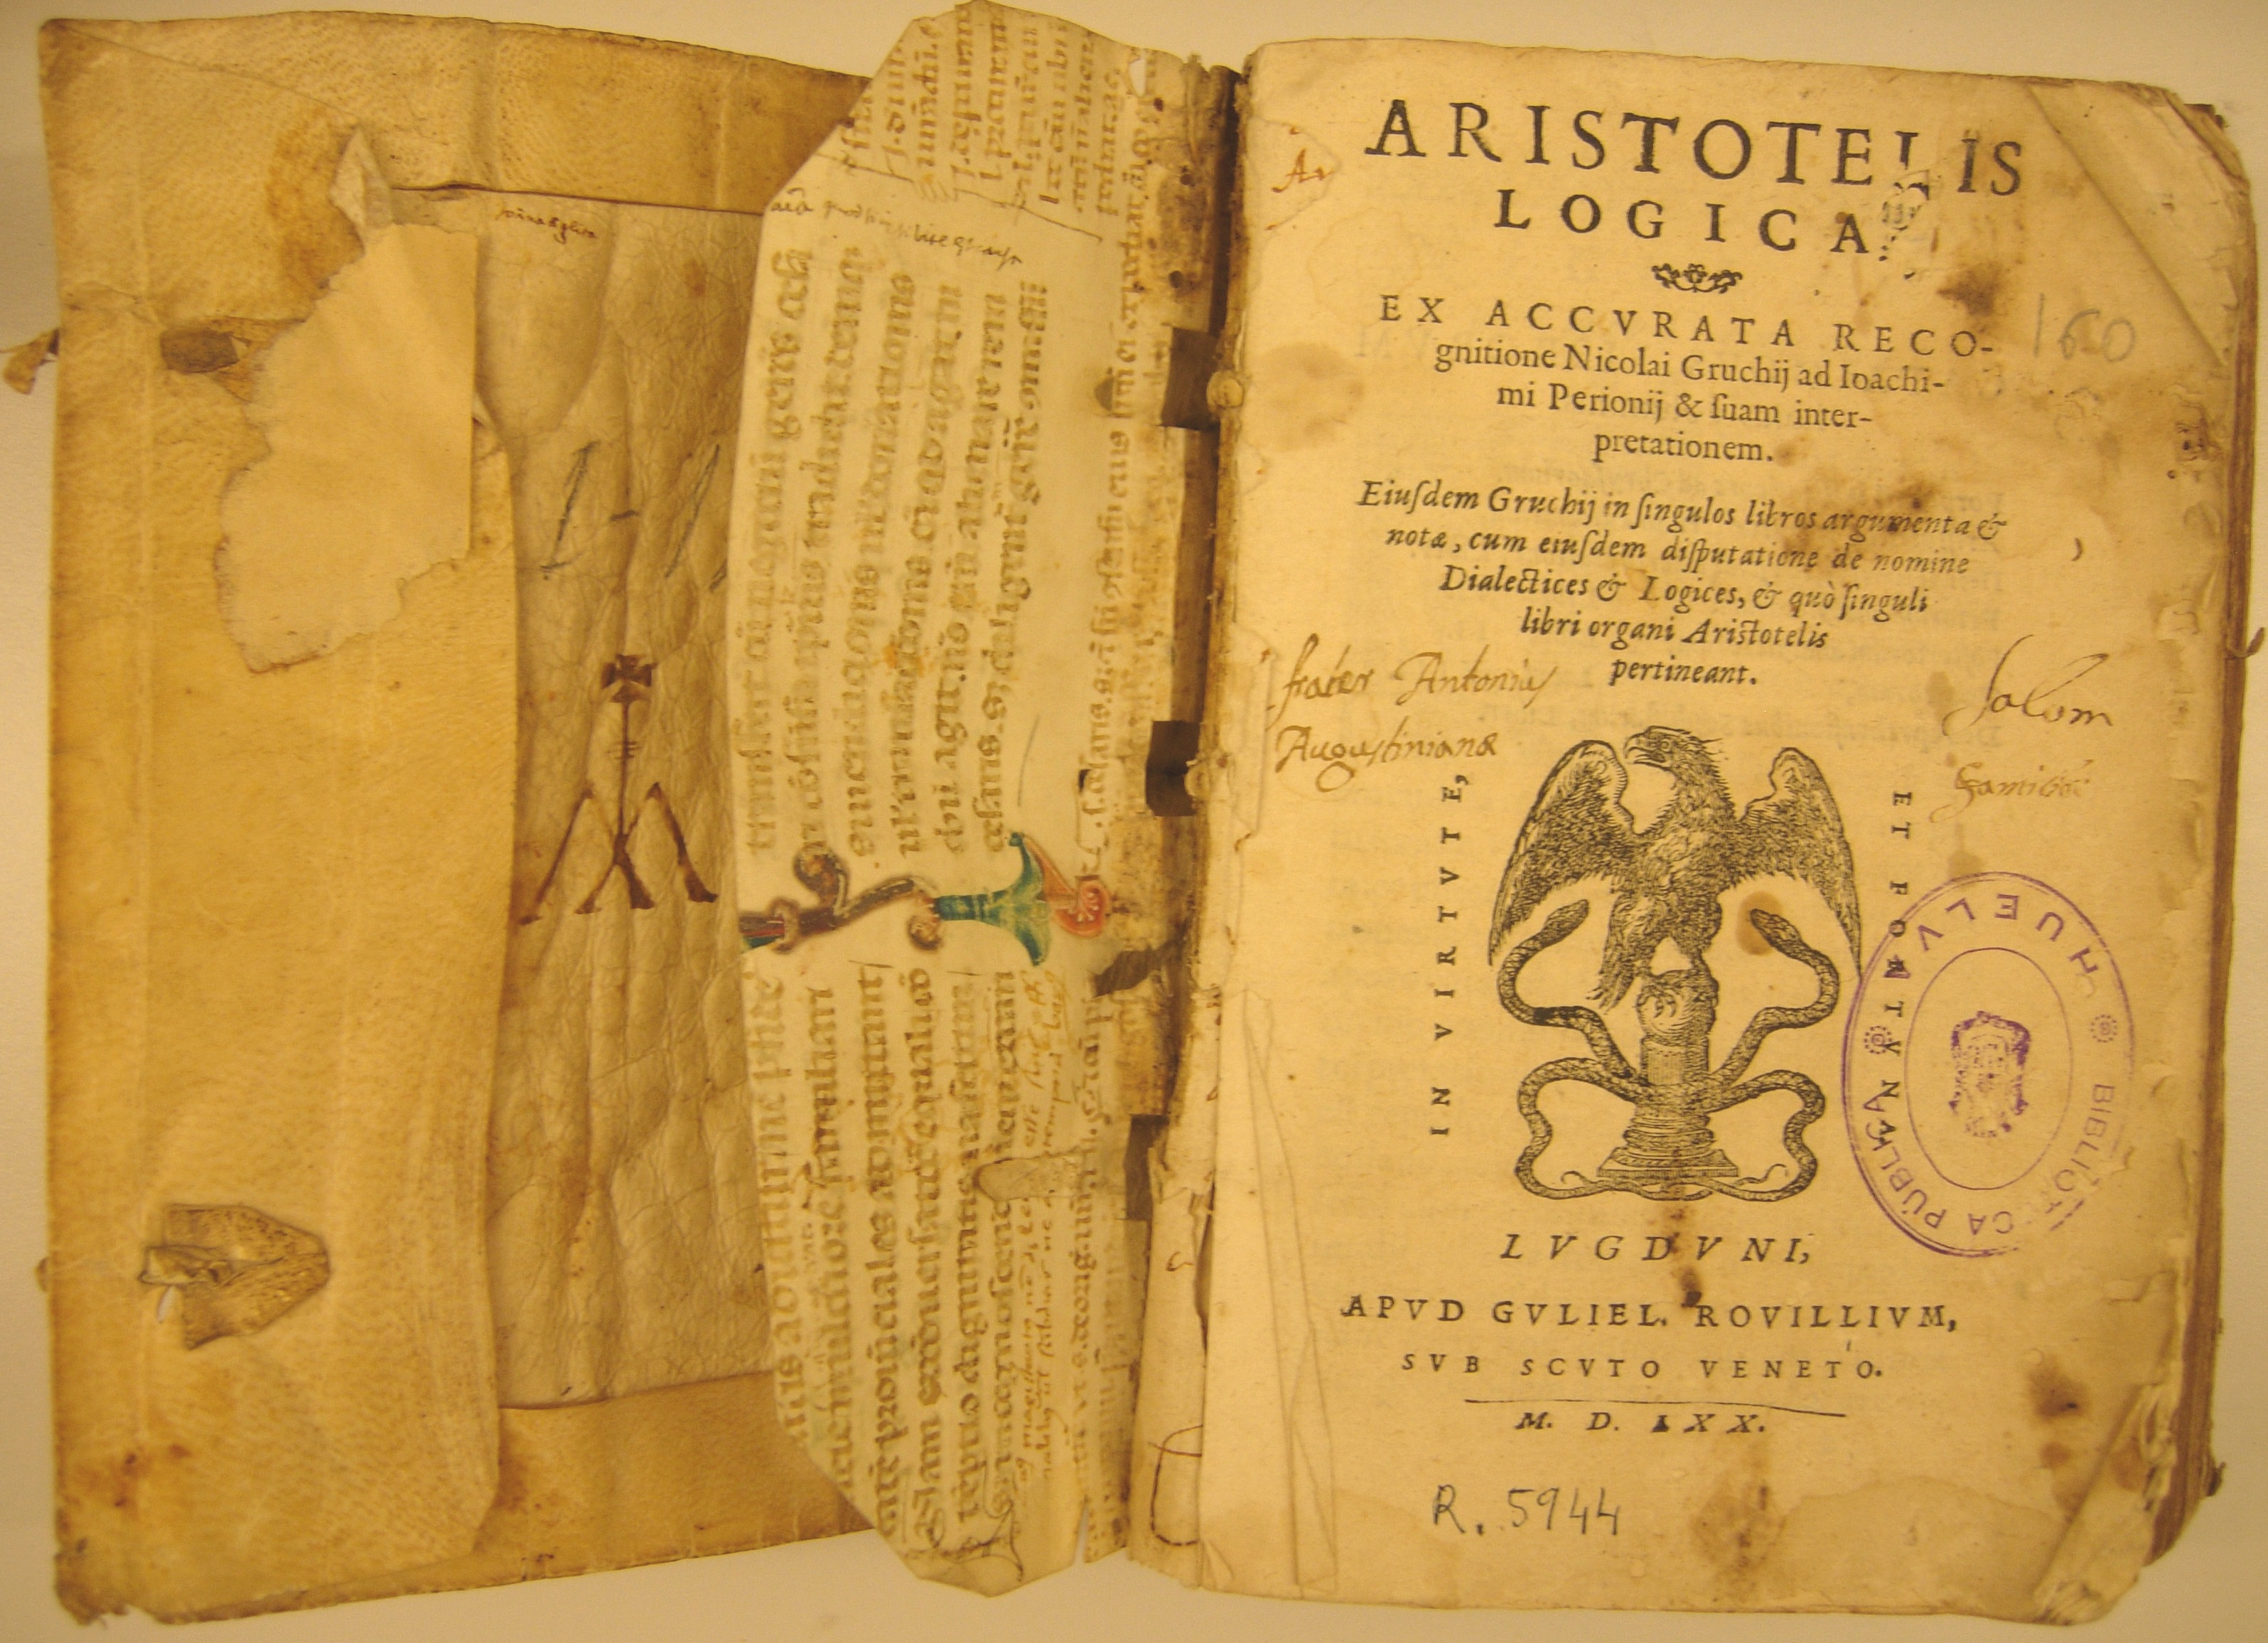 http://en.wikipedia.org/wiki/Image:Aristoteles_Logica_1570_Biblioteca_Huelva.jpg